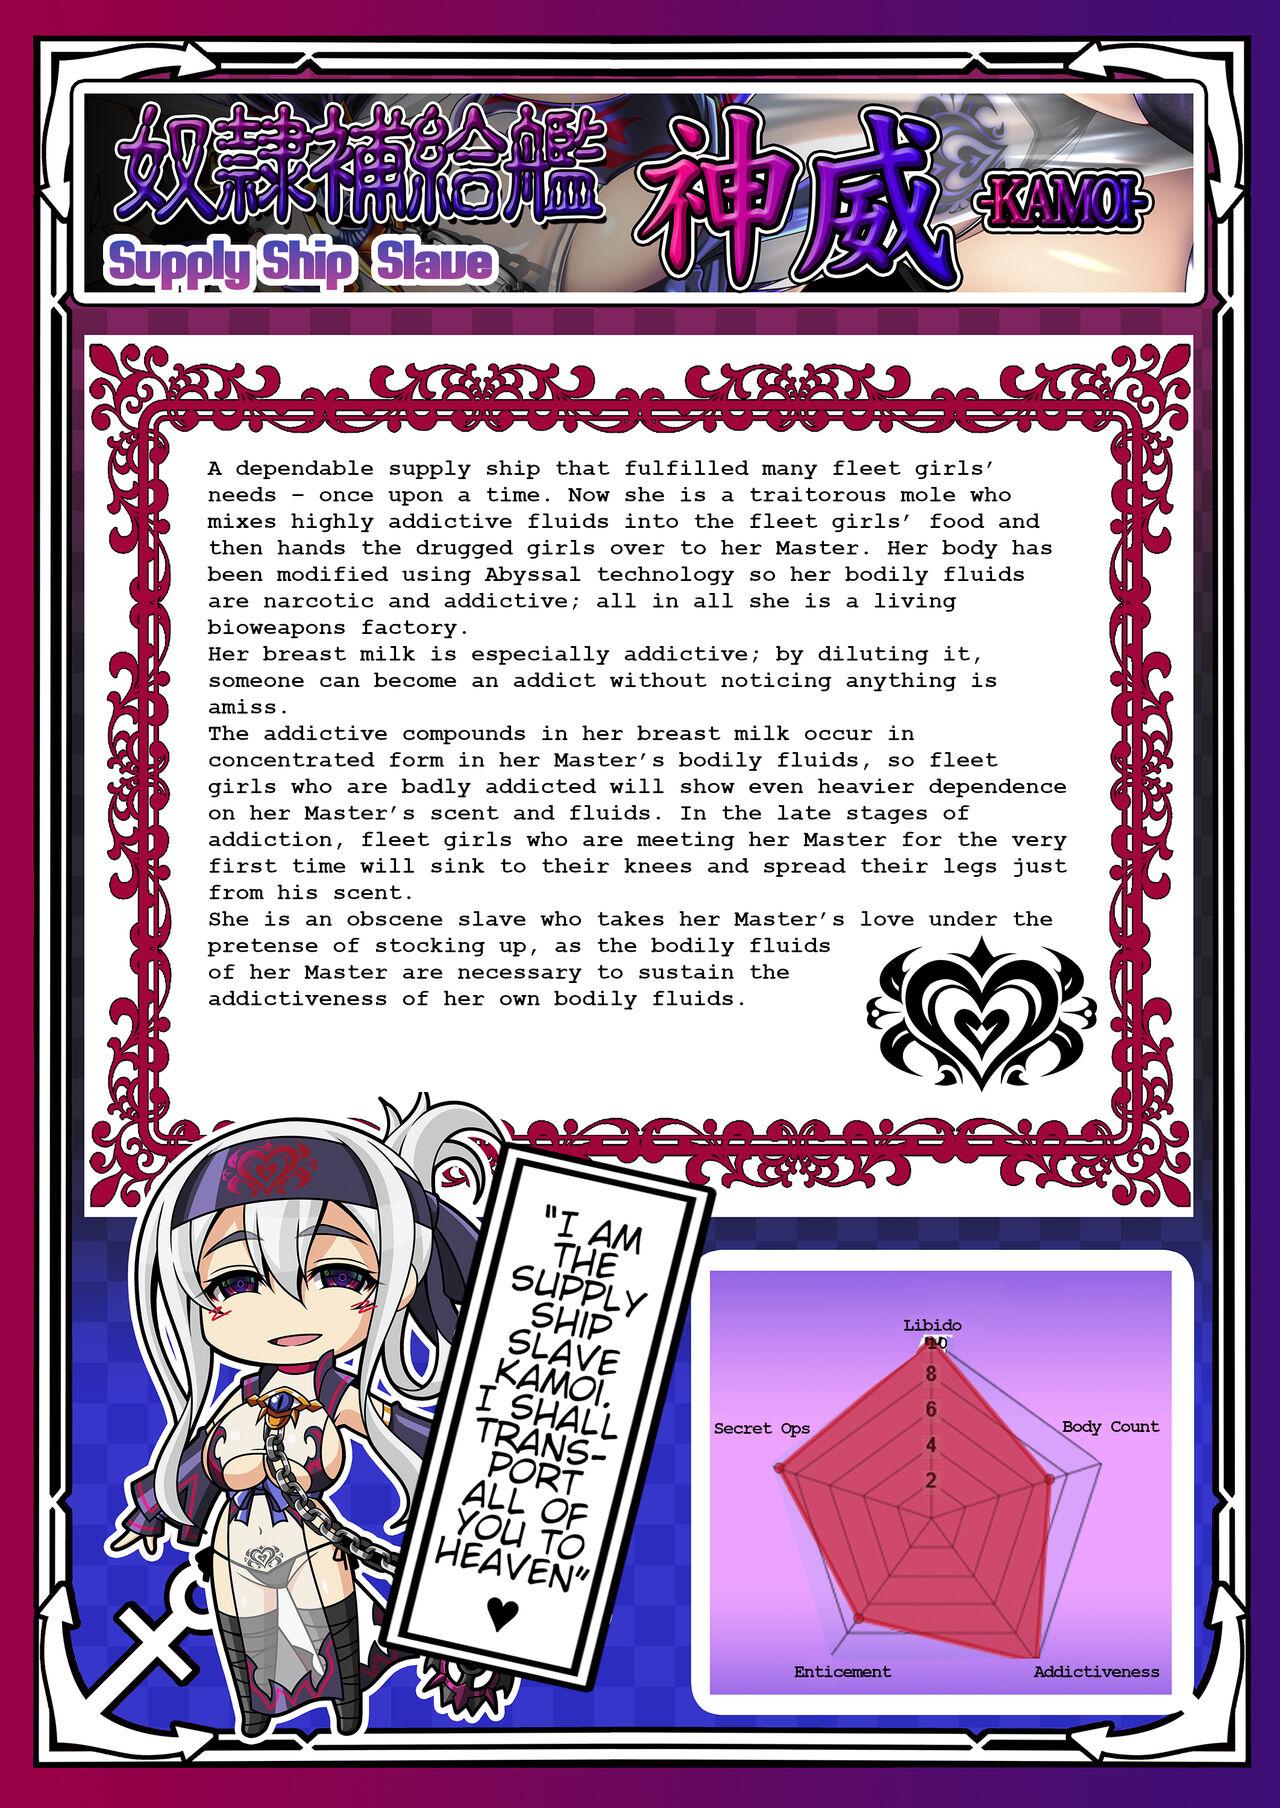 Akuochi Kanmusu Meikan + Akuochi Kanmusu Meikan Ni 1& 2 | Corrupted Fleet Girl Files Dossier #1 + 2.1 + 2.2 99